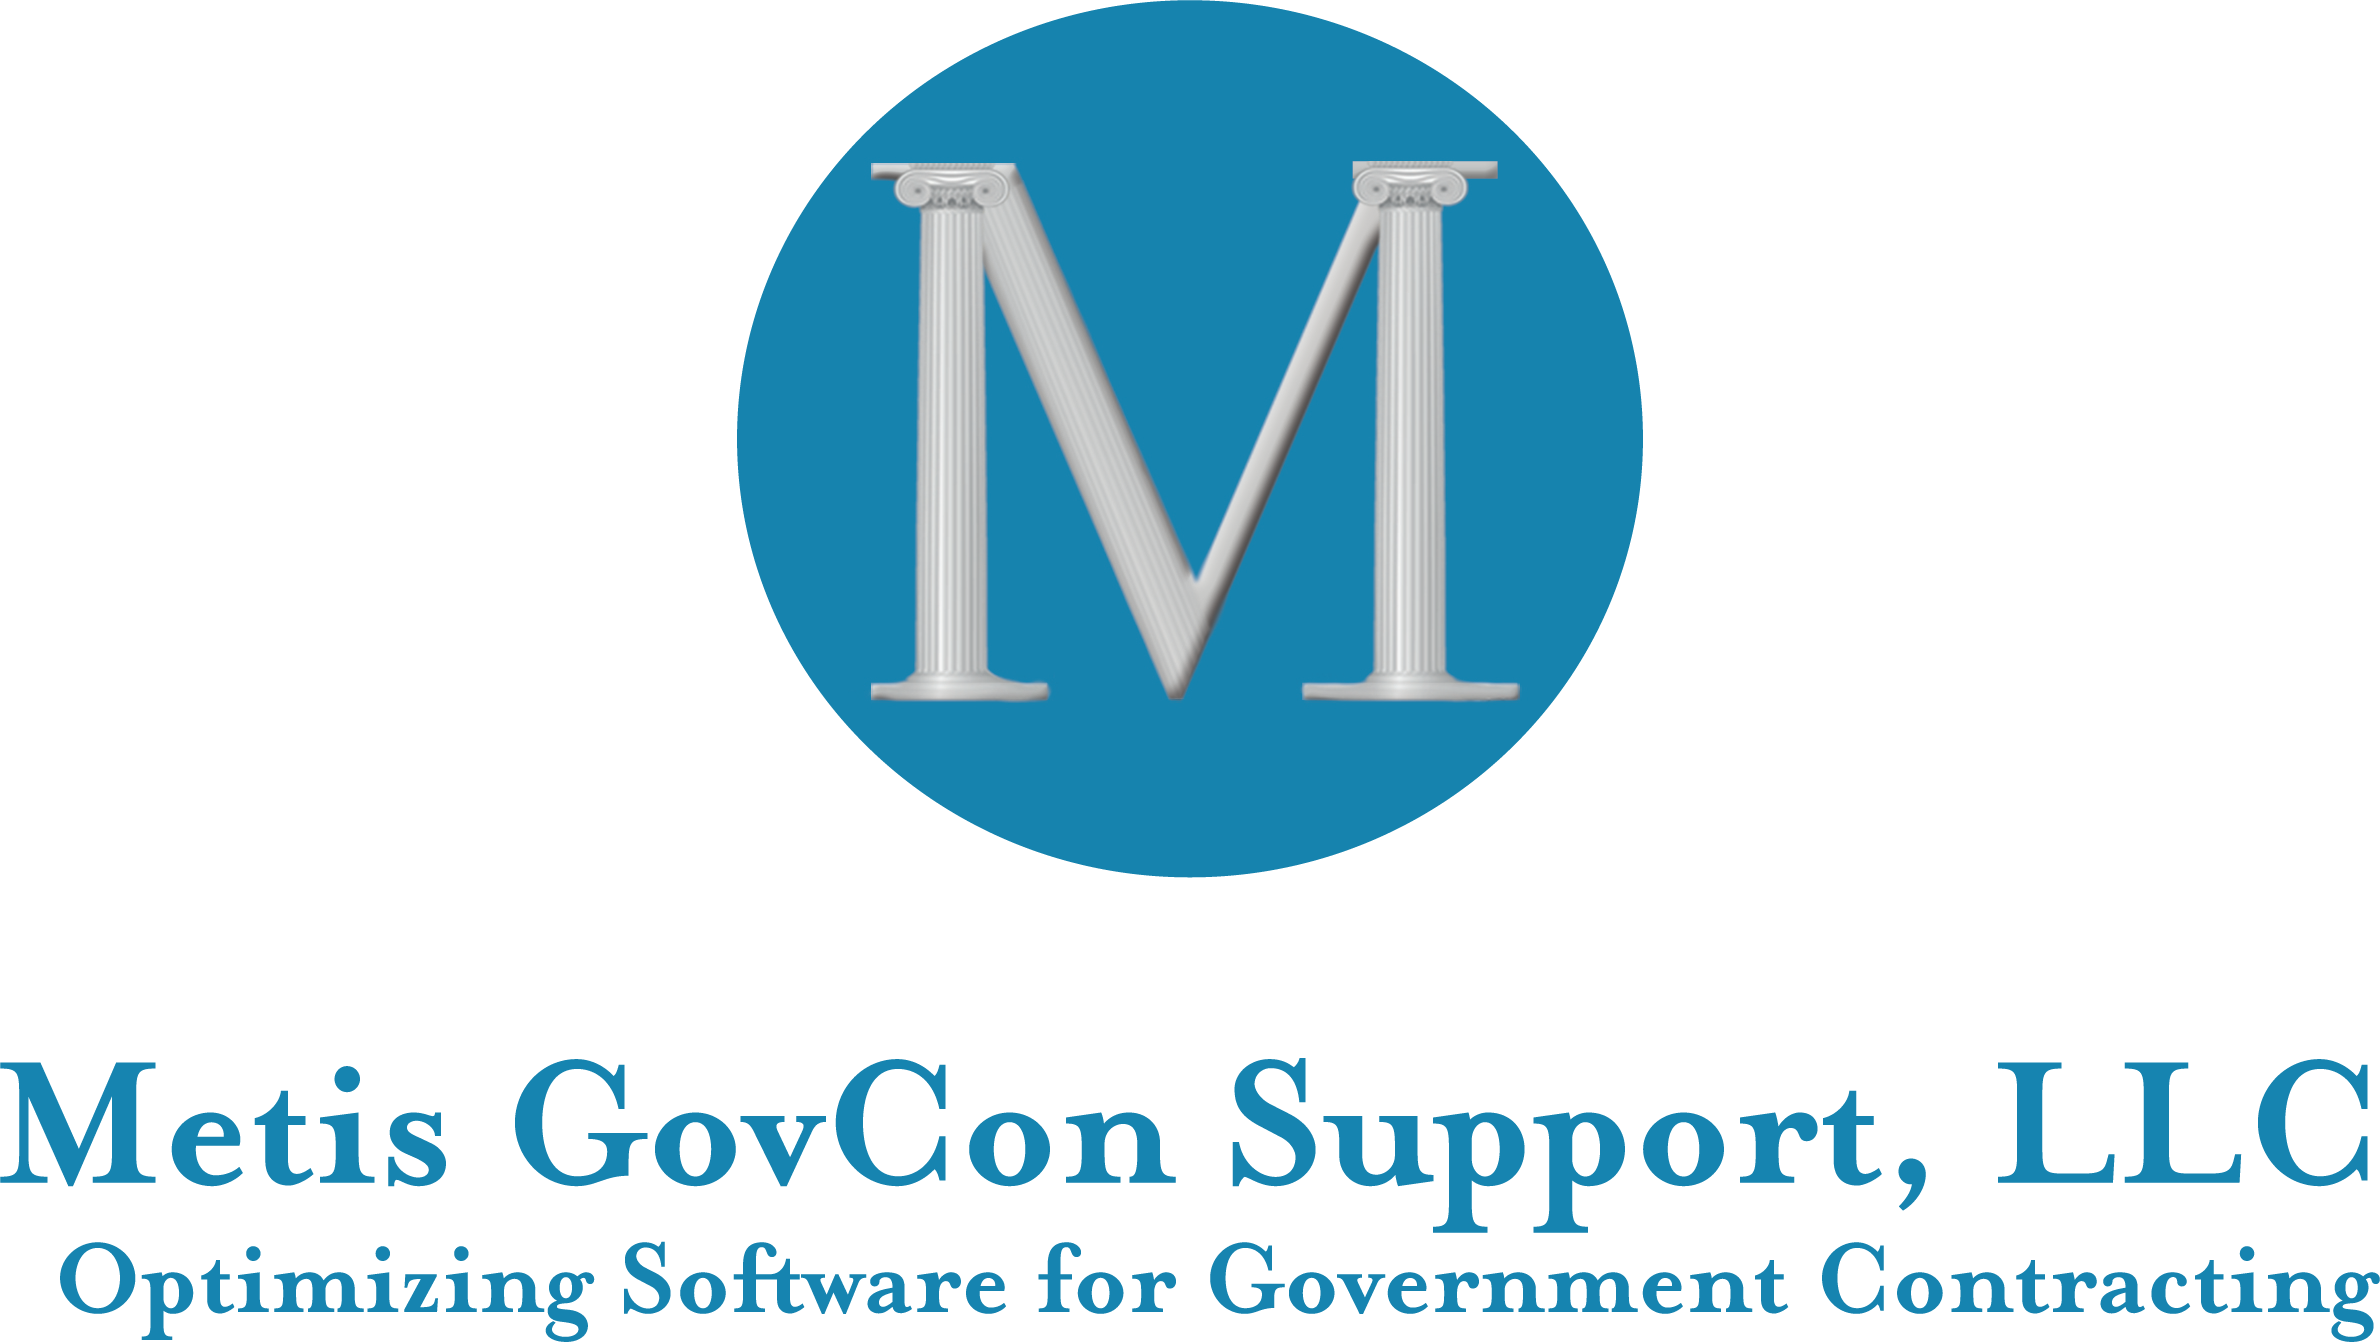 Metis GovCon Support LLC